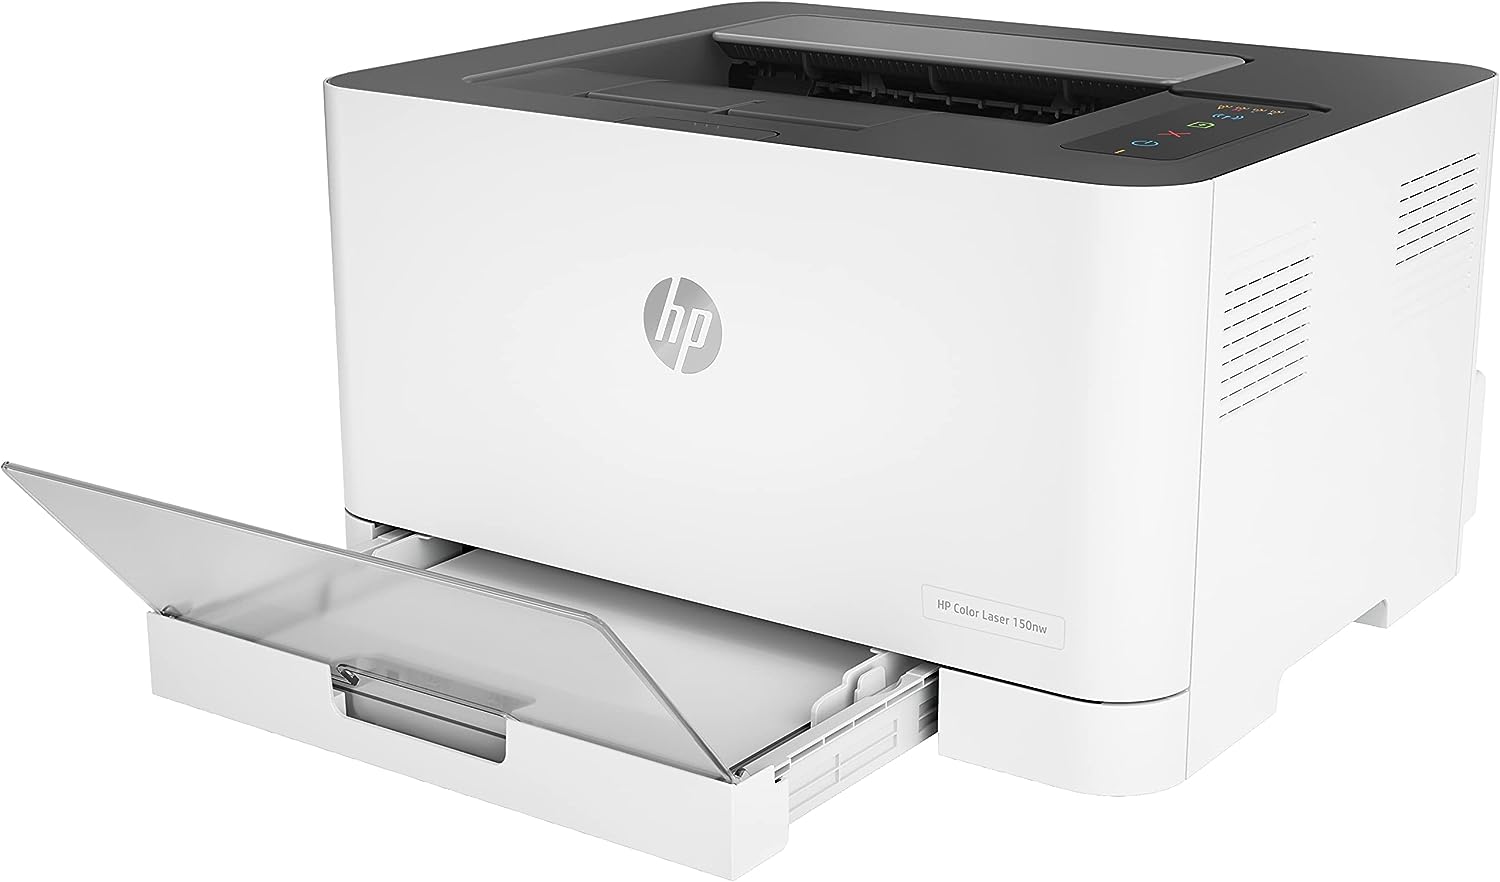 HP Color Laser 150nw Farb-Laserdrucker (Drucker, USB, LAN, W-LAN), weiß-grau 